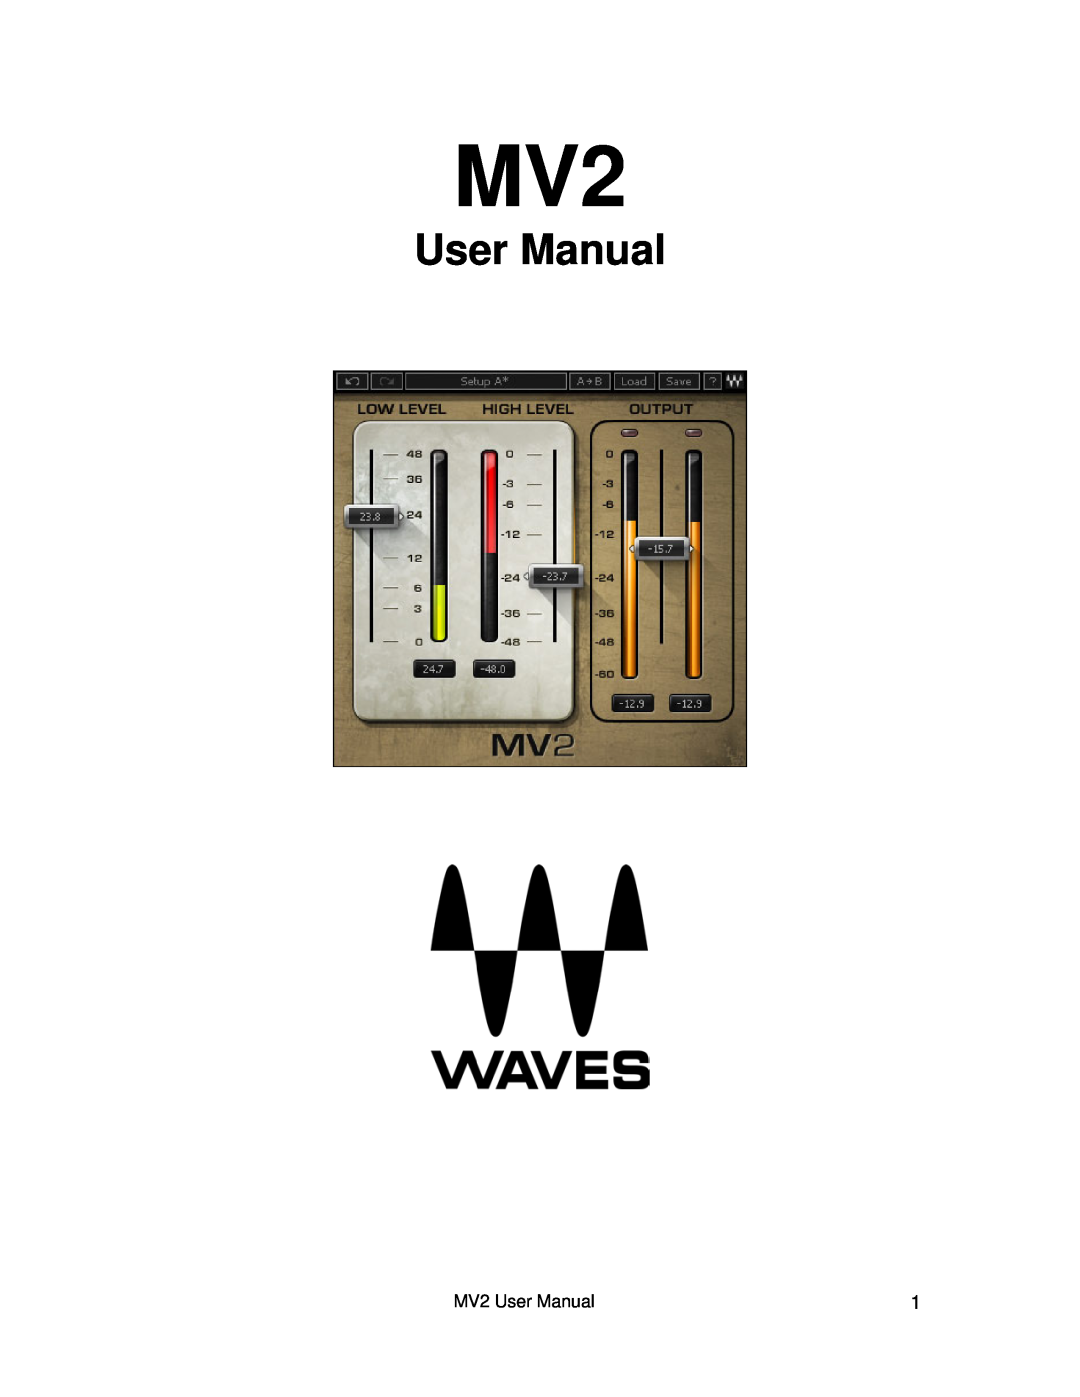 Waves user manual MV2 User Manual 